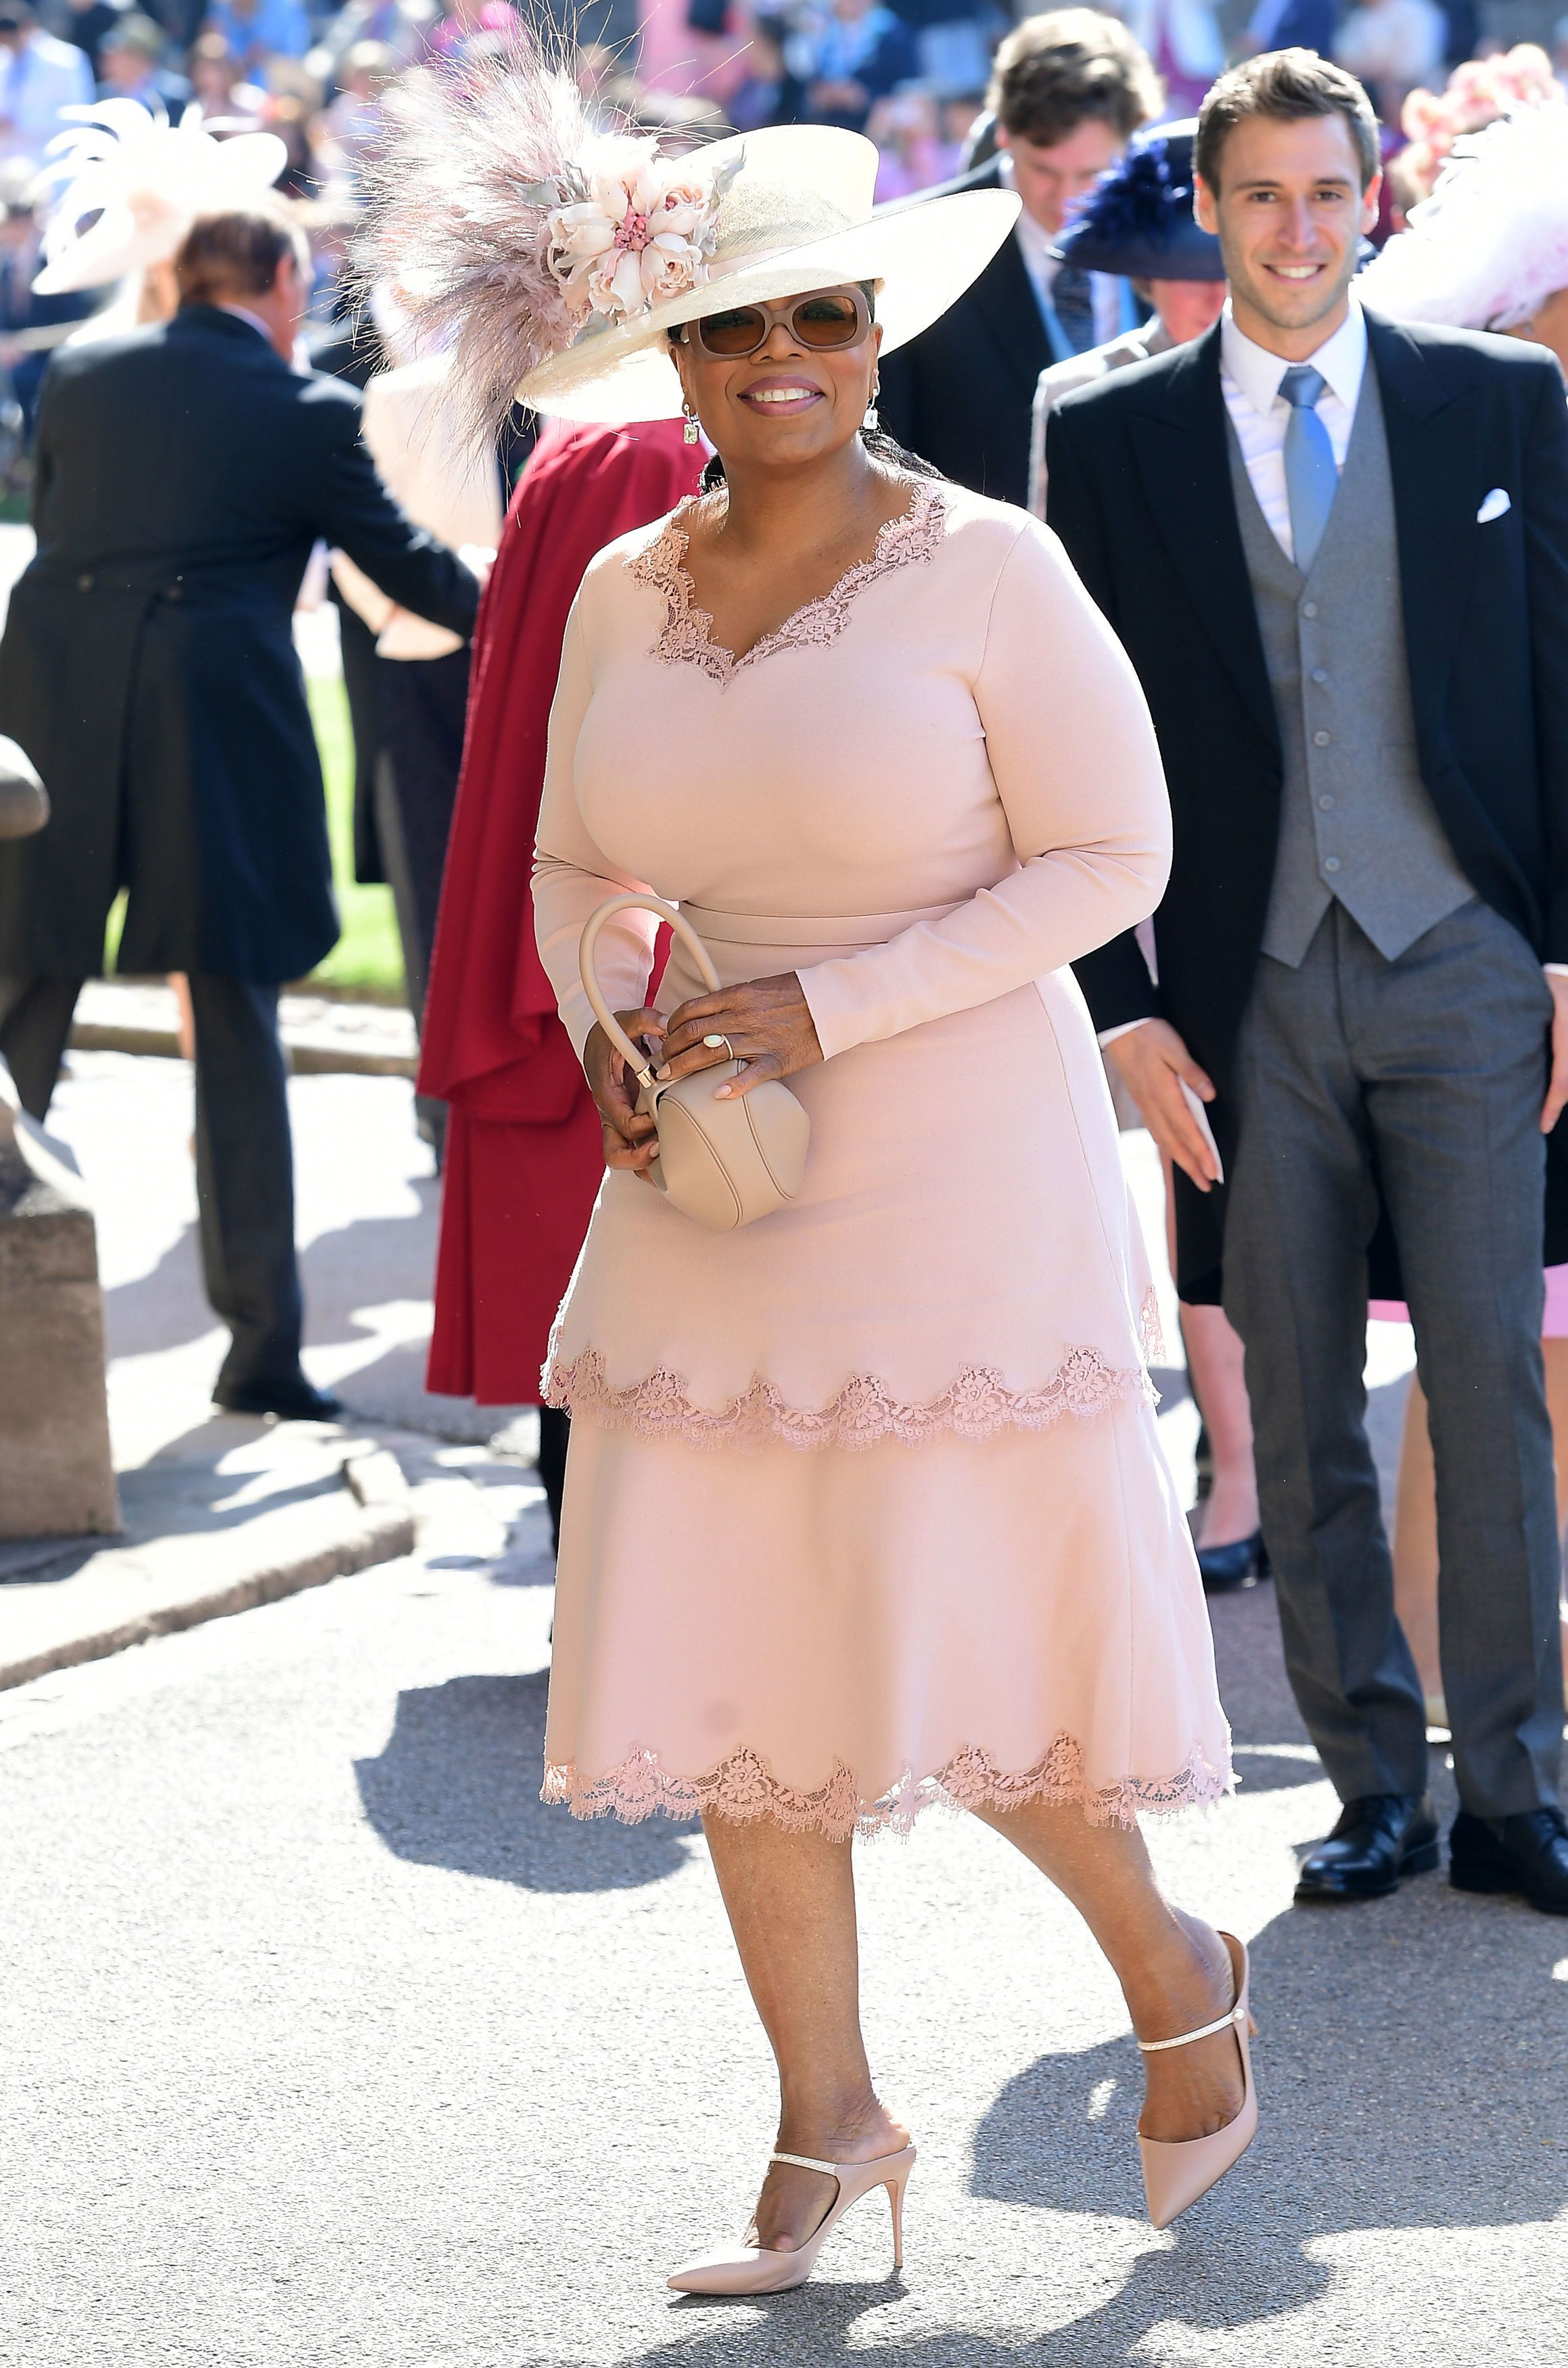 Oprah Winfrey Shares Her Royal Wedding Experience